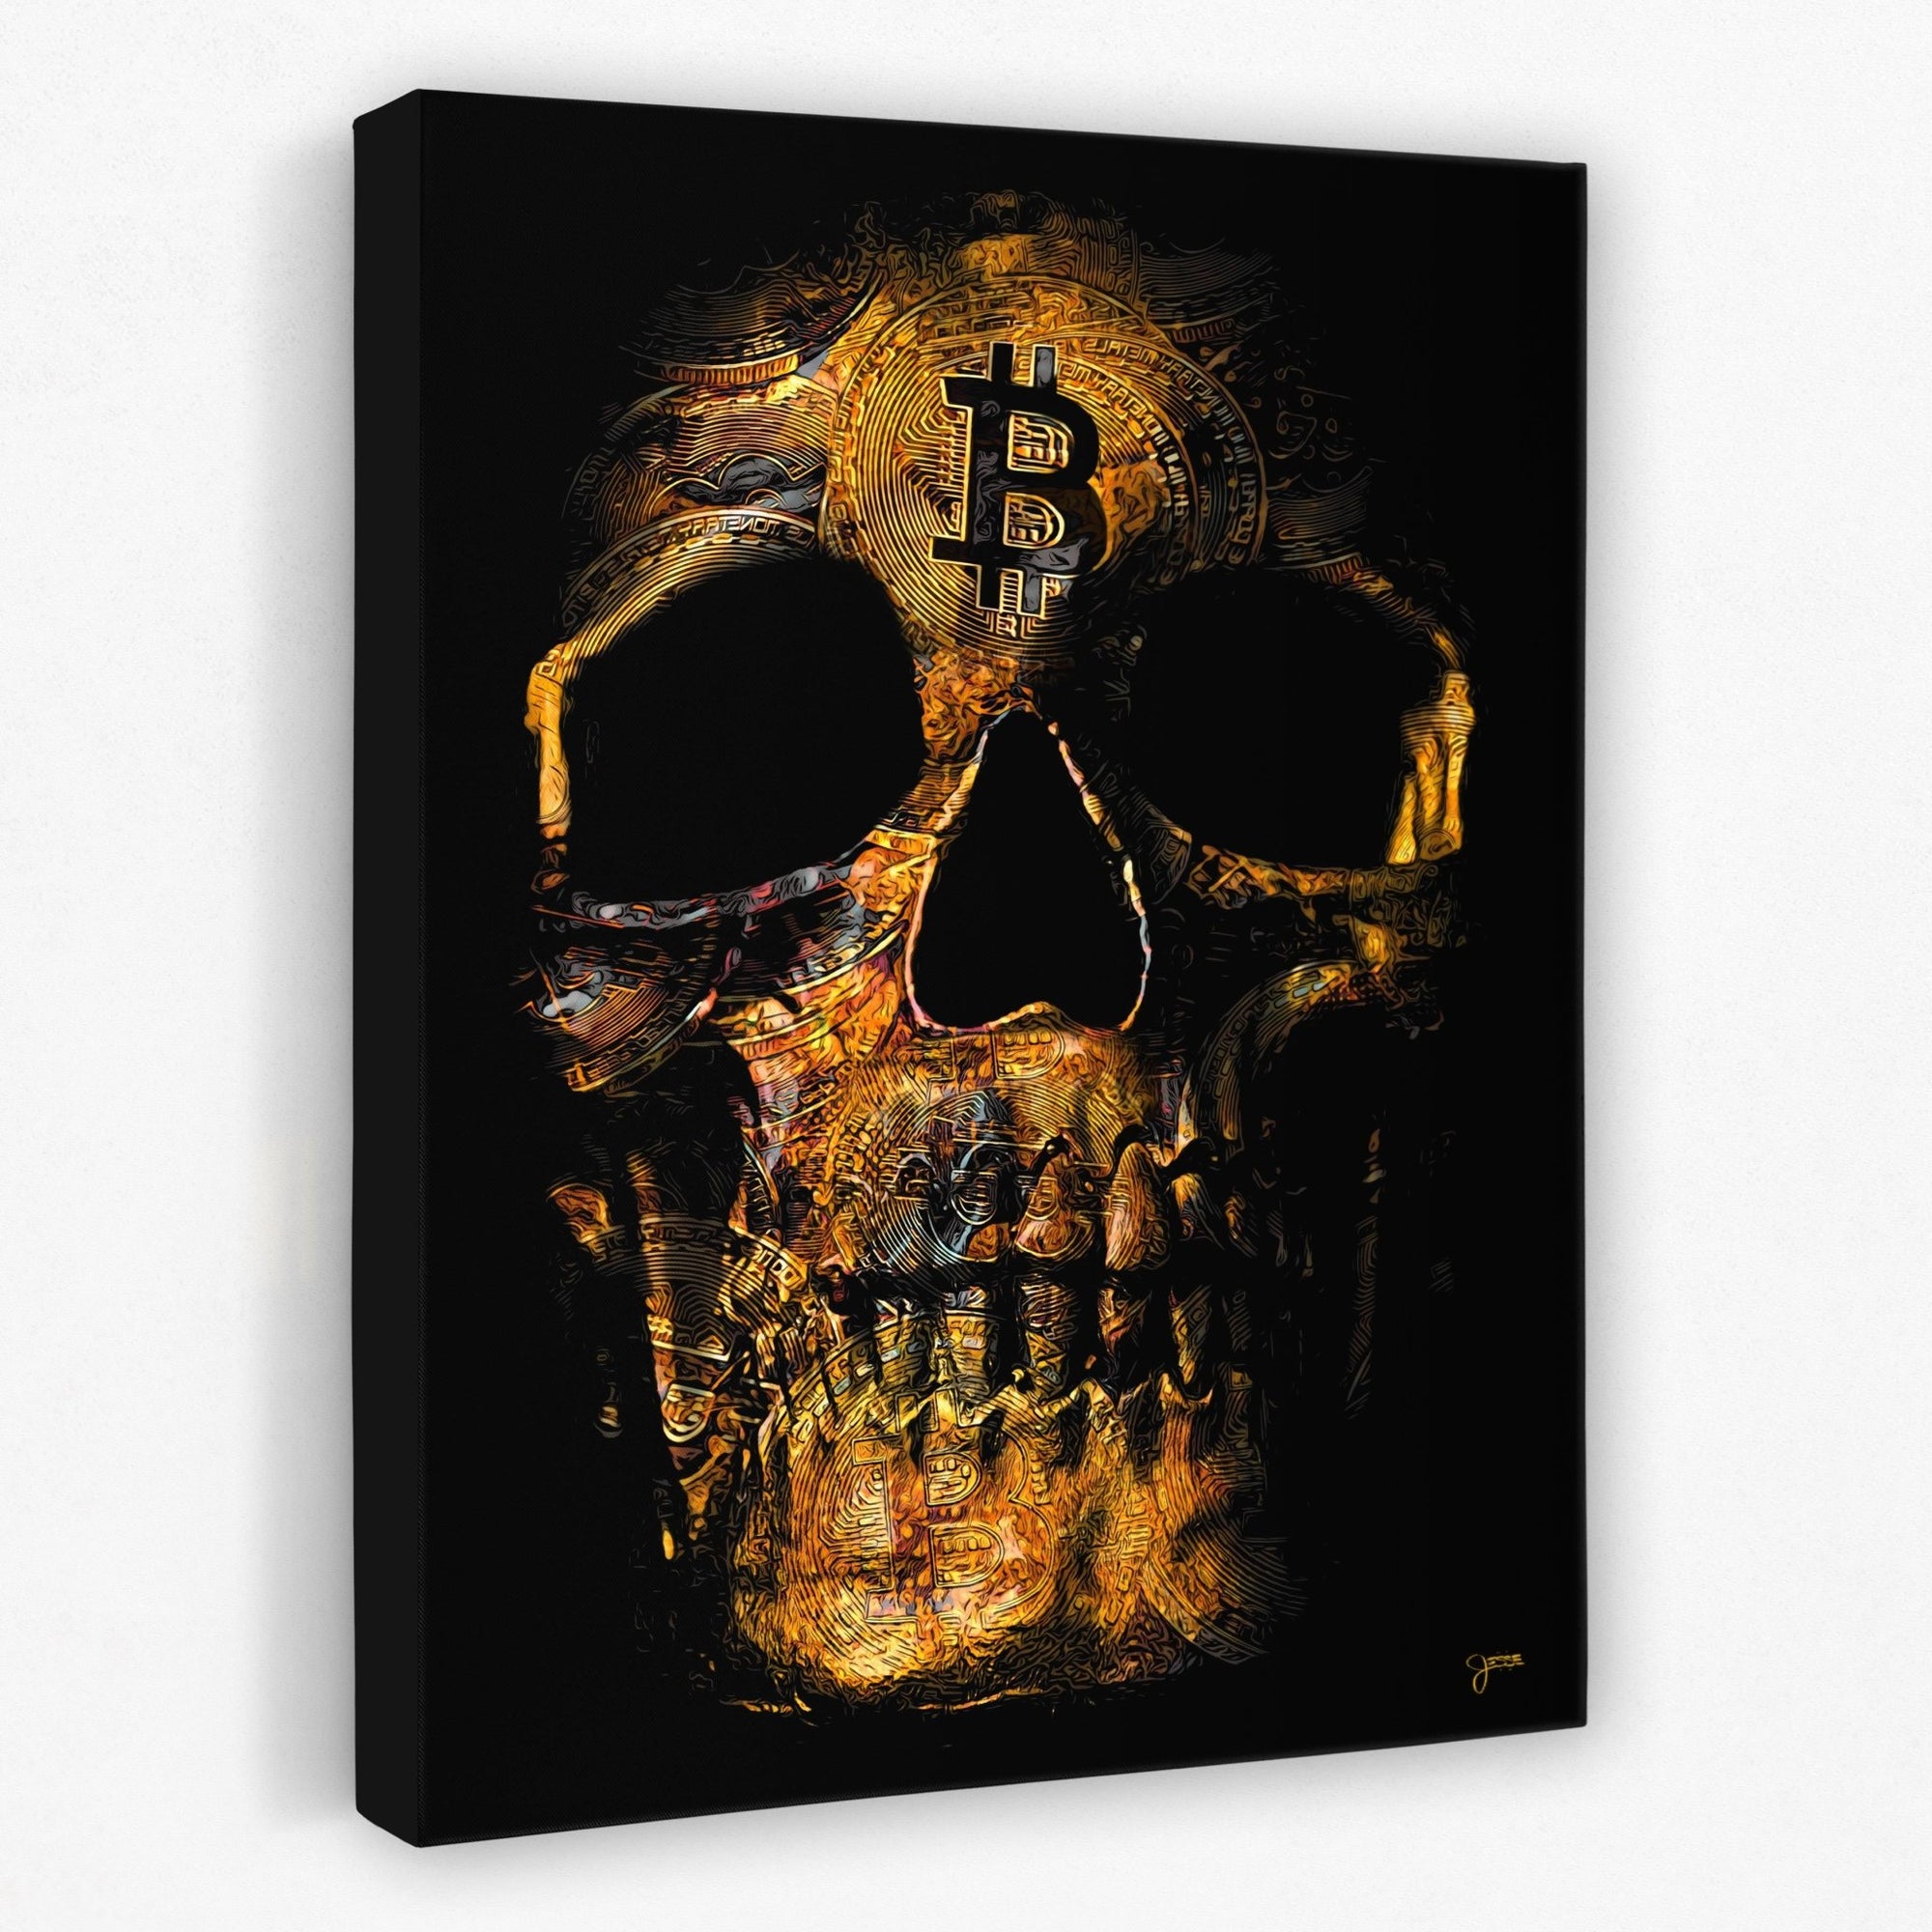 Bitcoin Skull - Luxury Wall Art - Canvas Print